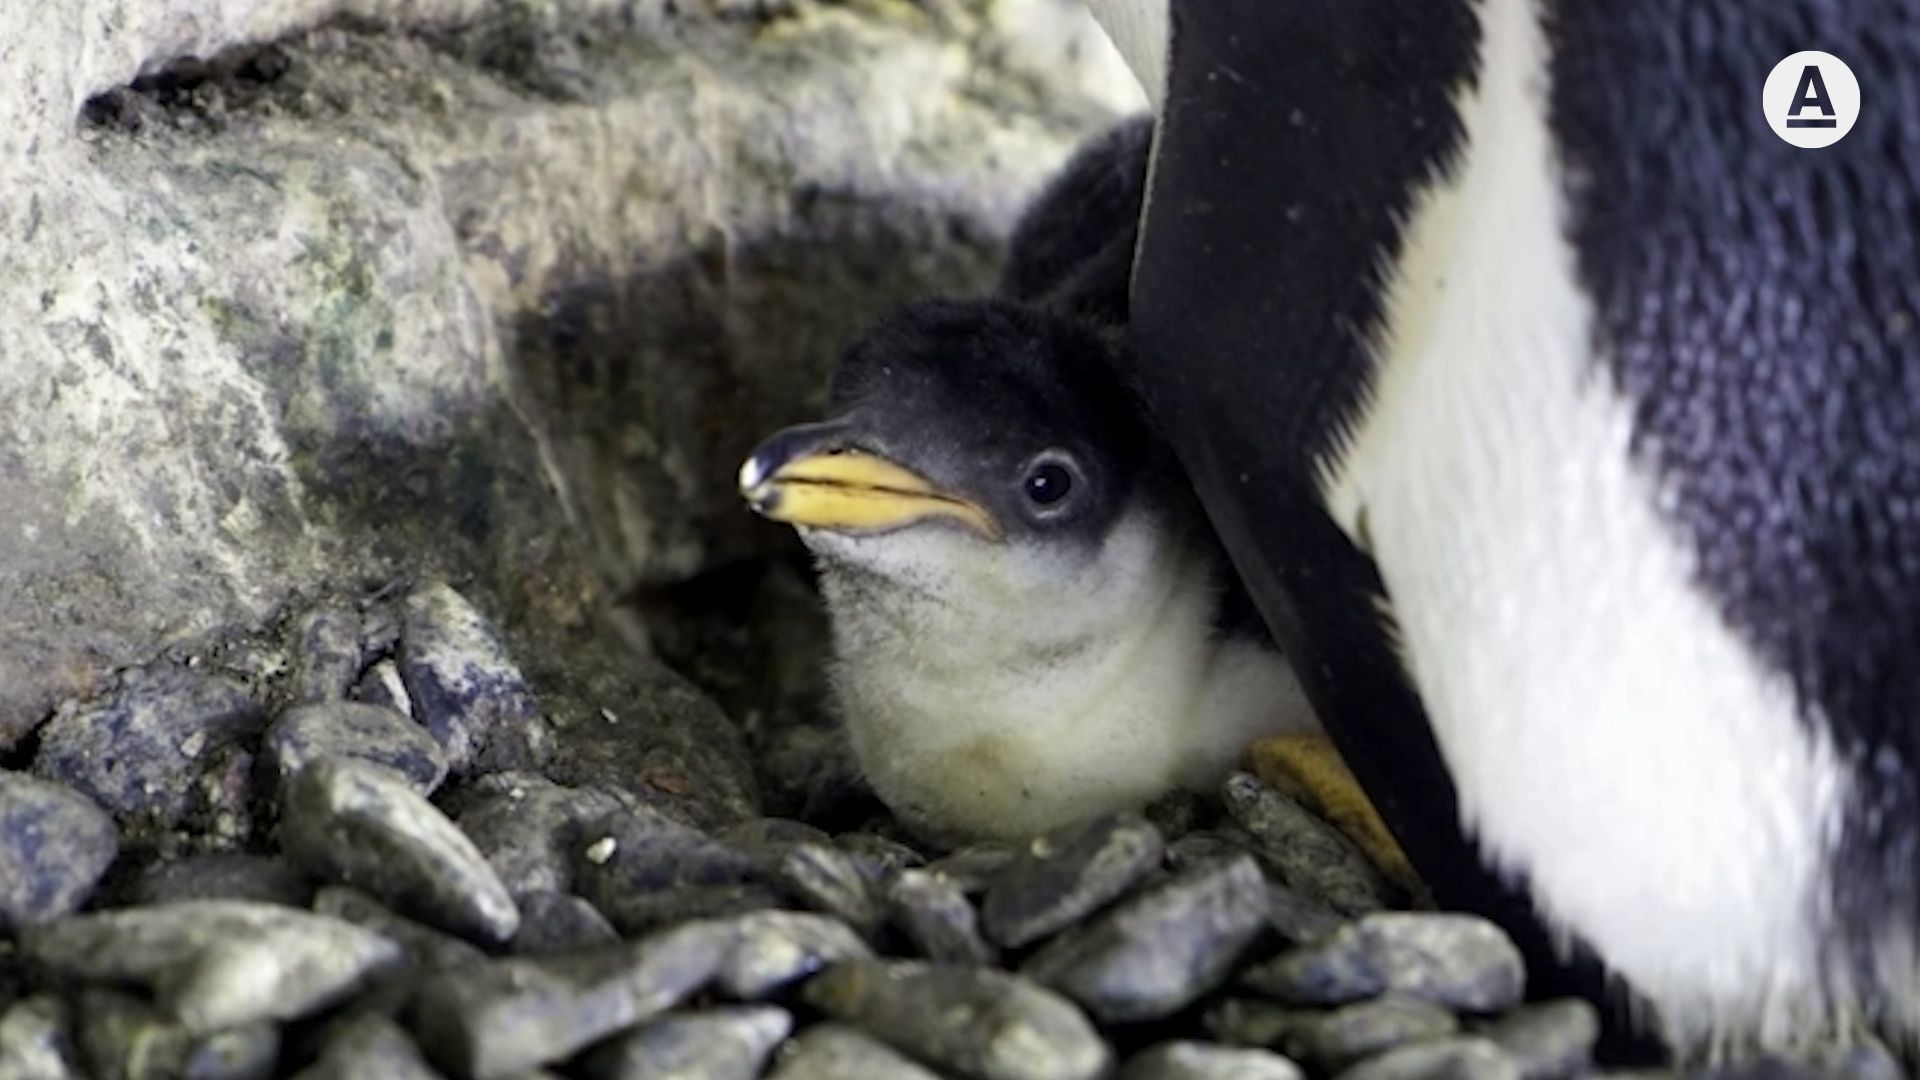 Tučňáčí lesbičky Electra a Viola adoptovali mládě jiného páru